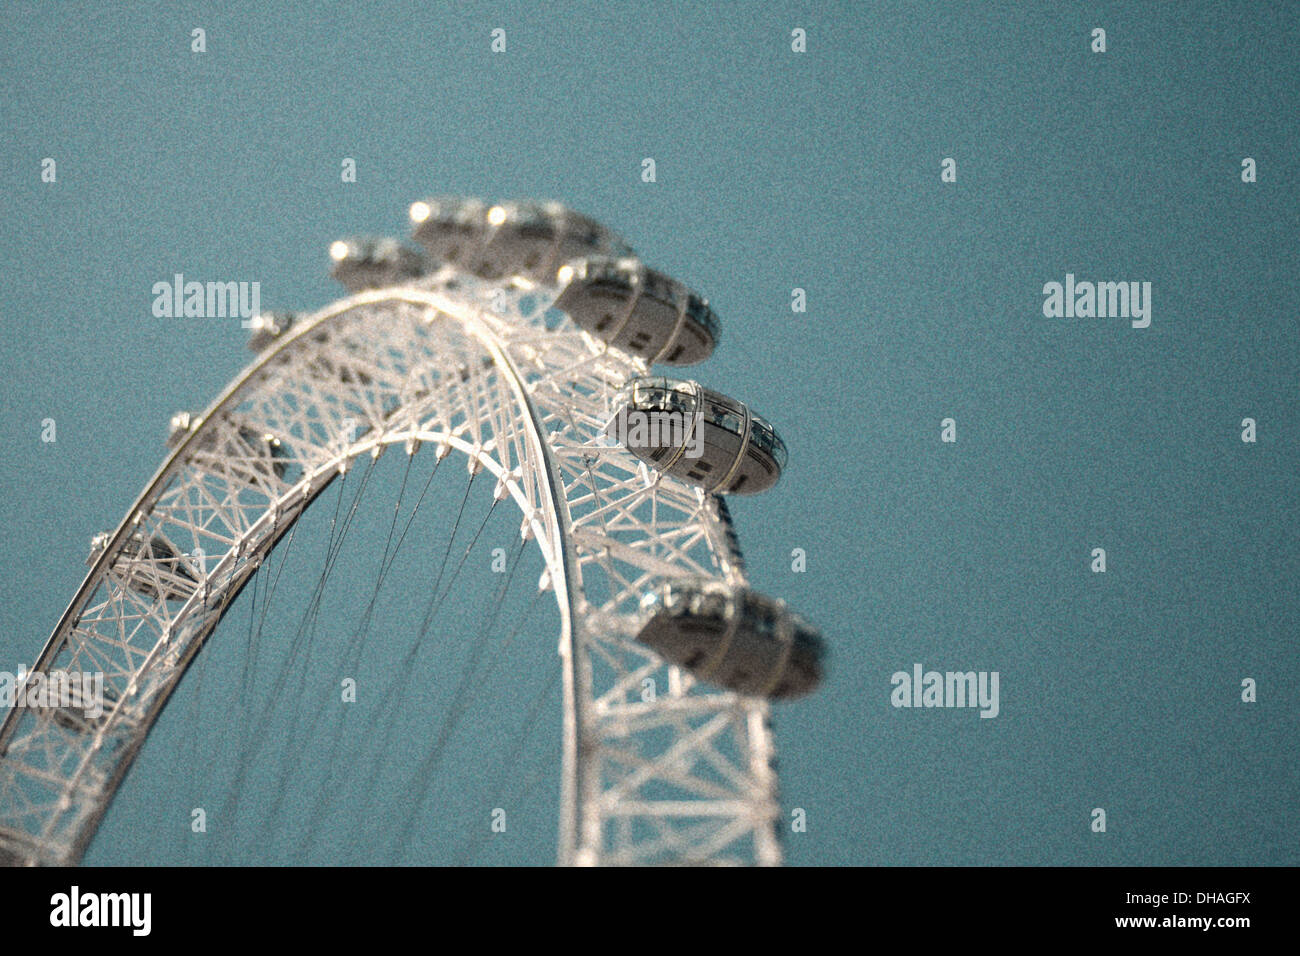 Millennium wheel London differential focus, Lensbaby Stock Photo